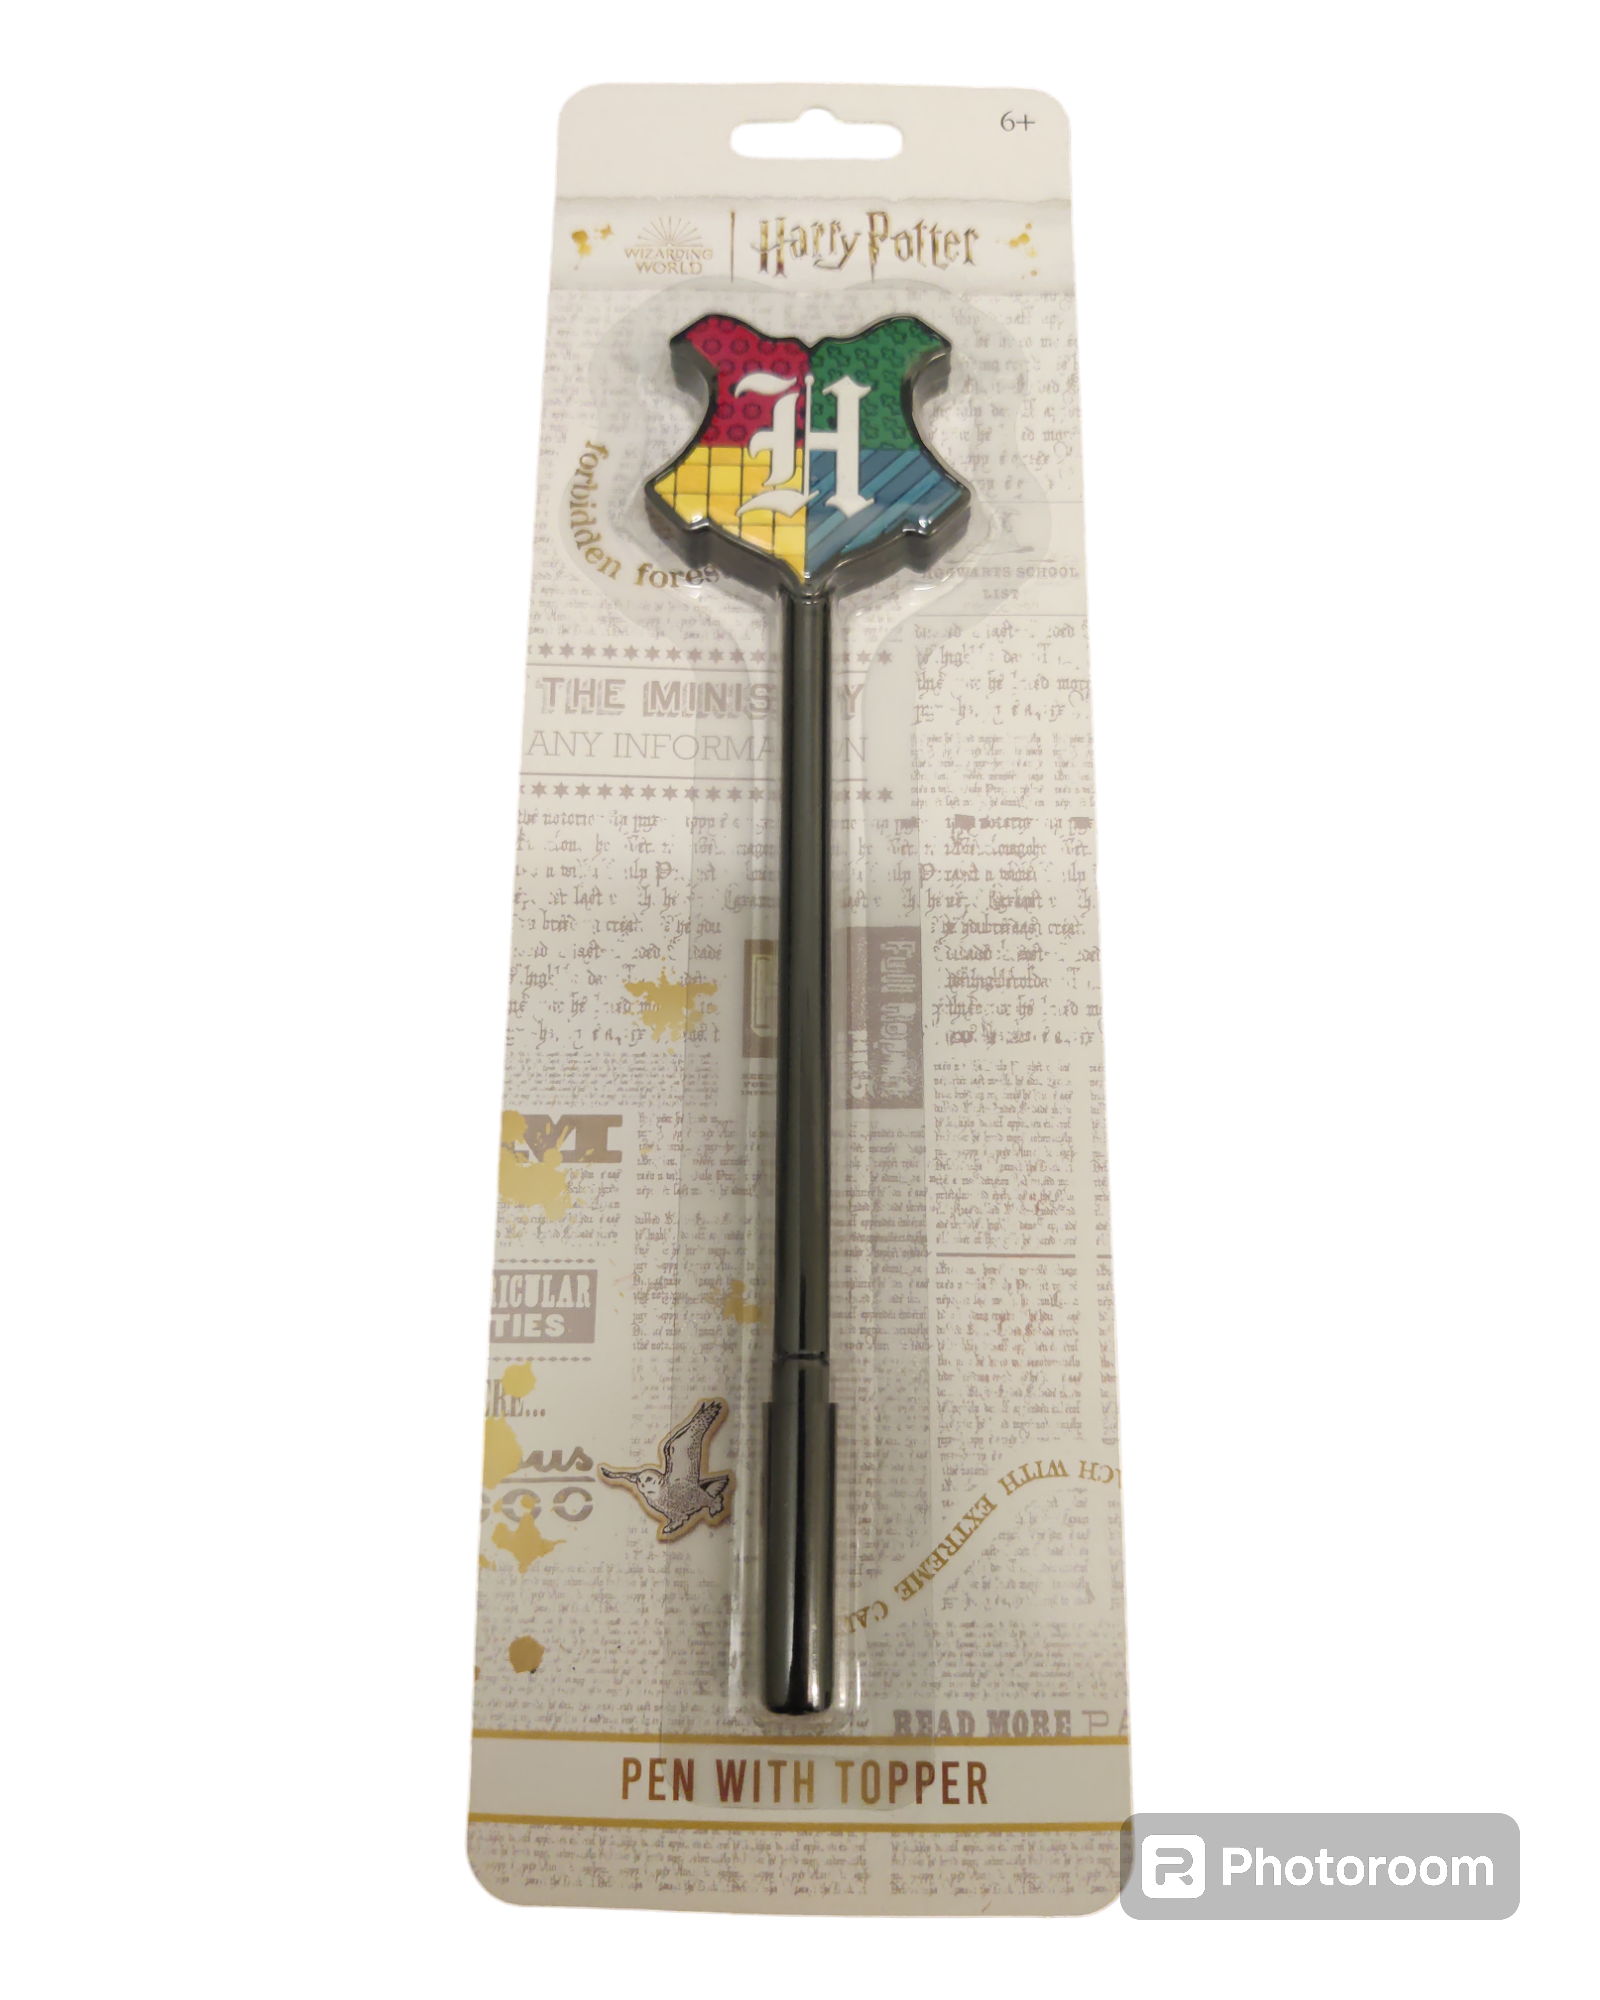 Hogwarts Crest Pen with Topper